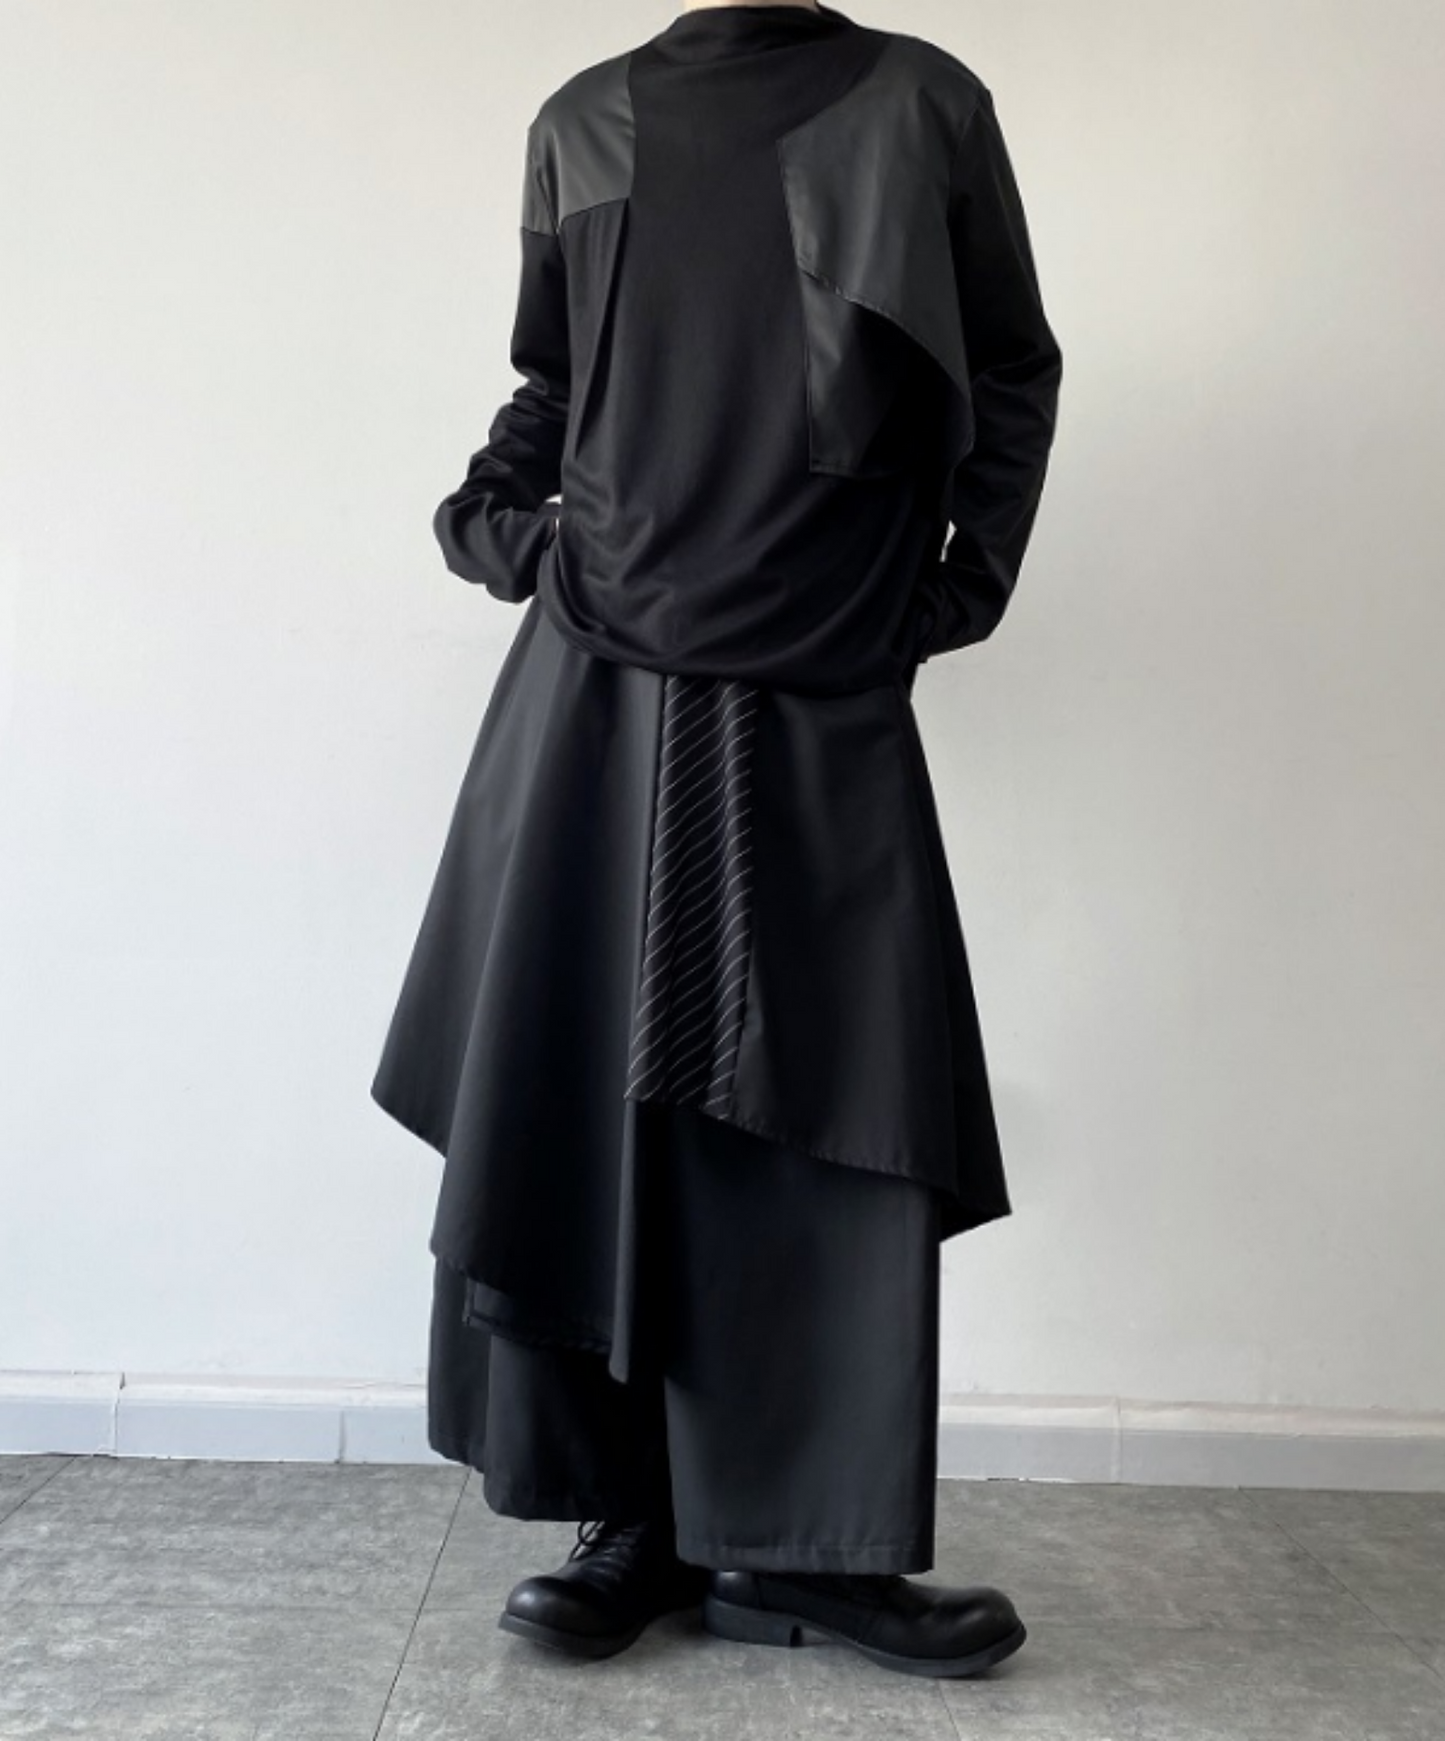 【style7】dark mode outfit set EN823（t-shirt + pants set）